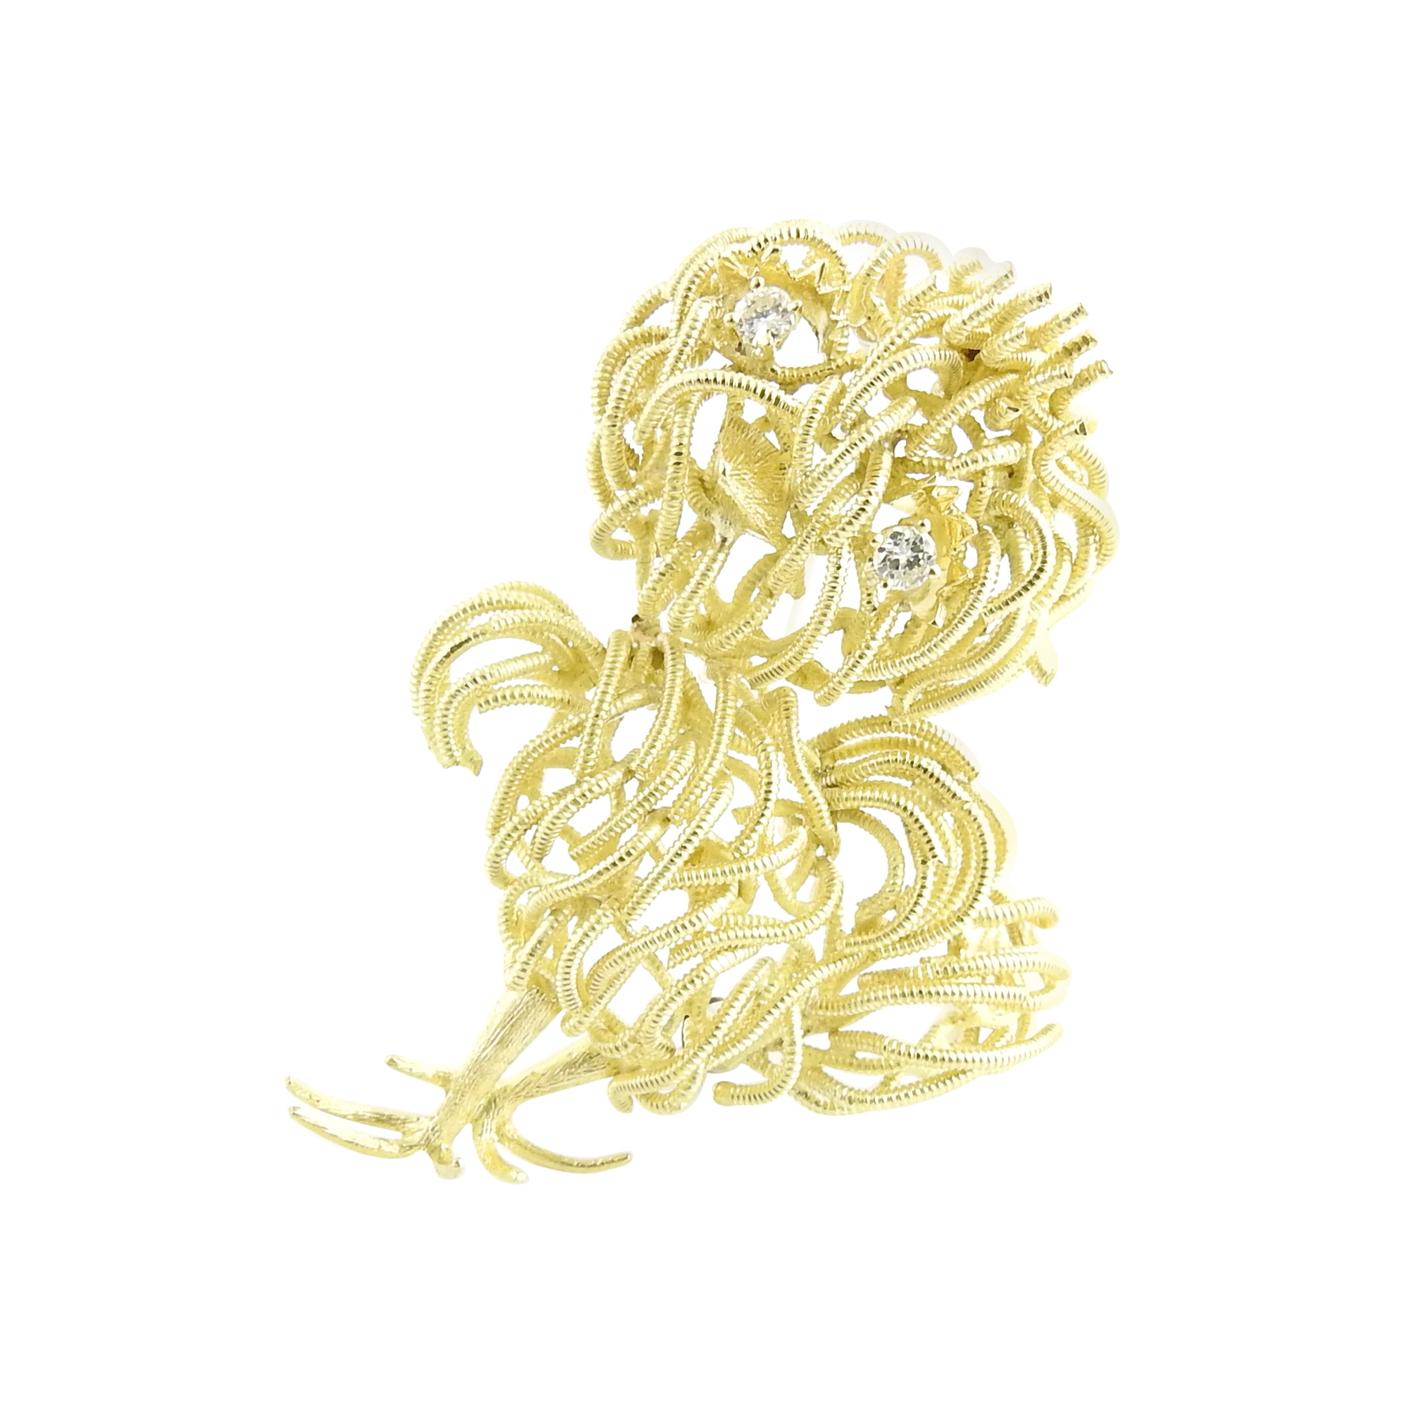 18 Karat Yellow Gold and Diamond Chick Brooch or Pin